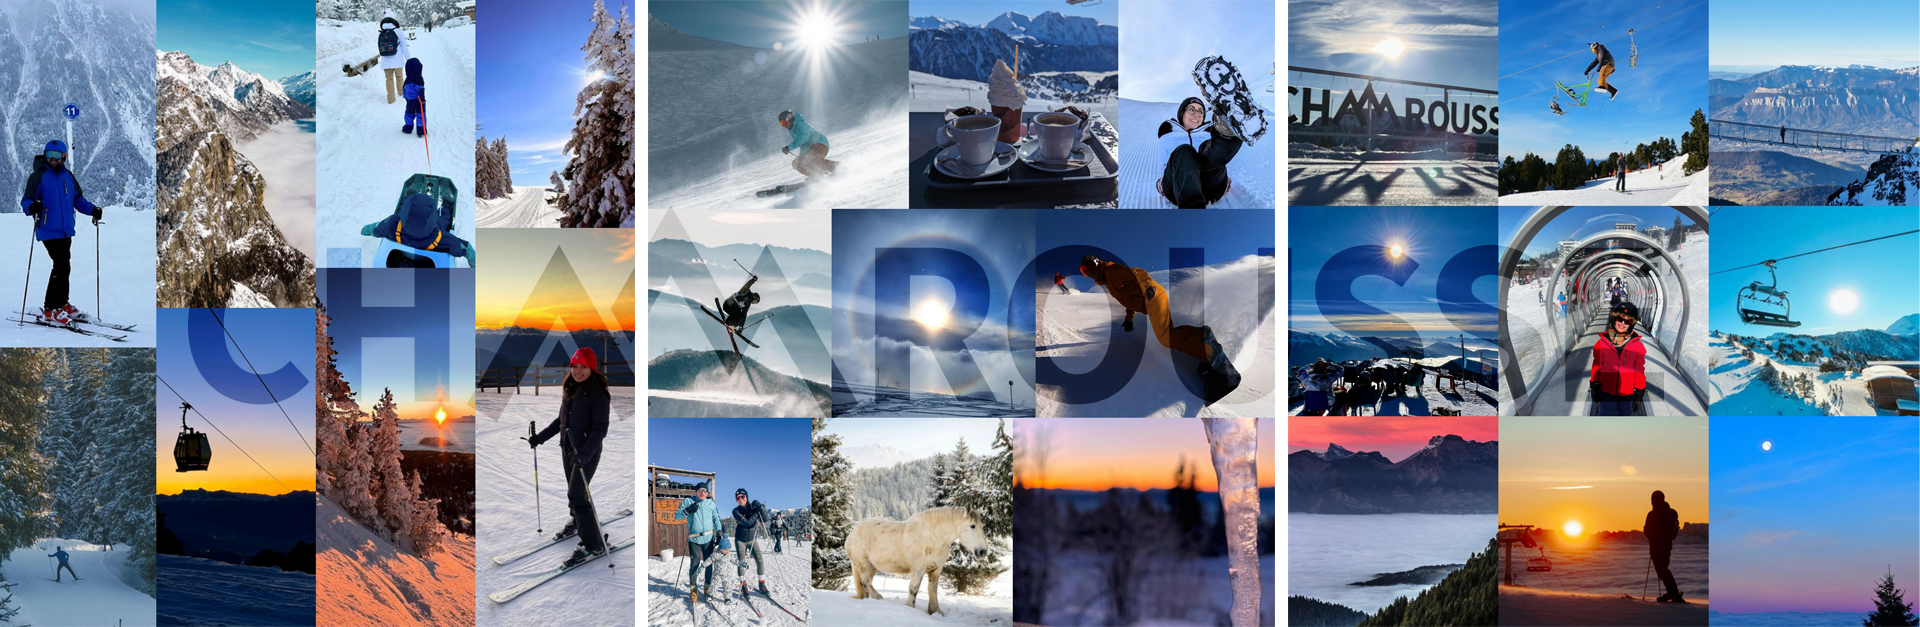 Chamrousse montage photo instagram memories facebook hiver 2023-2024 station ski montagne grenoble isère alpes france - © DR